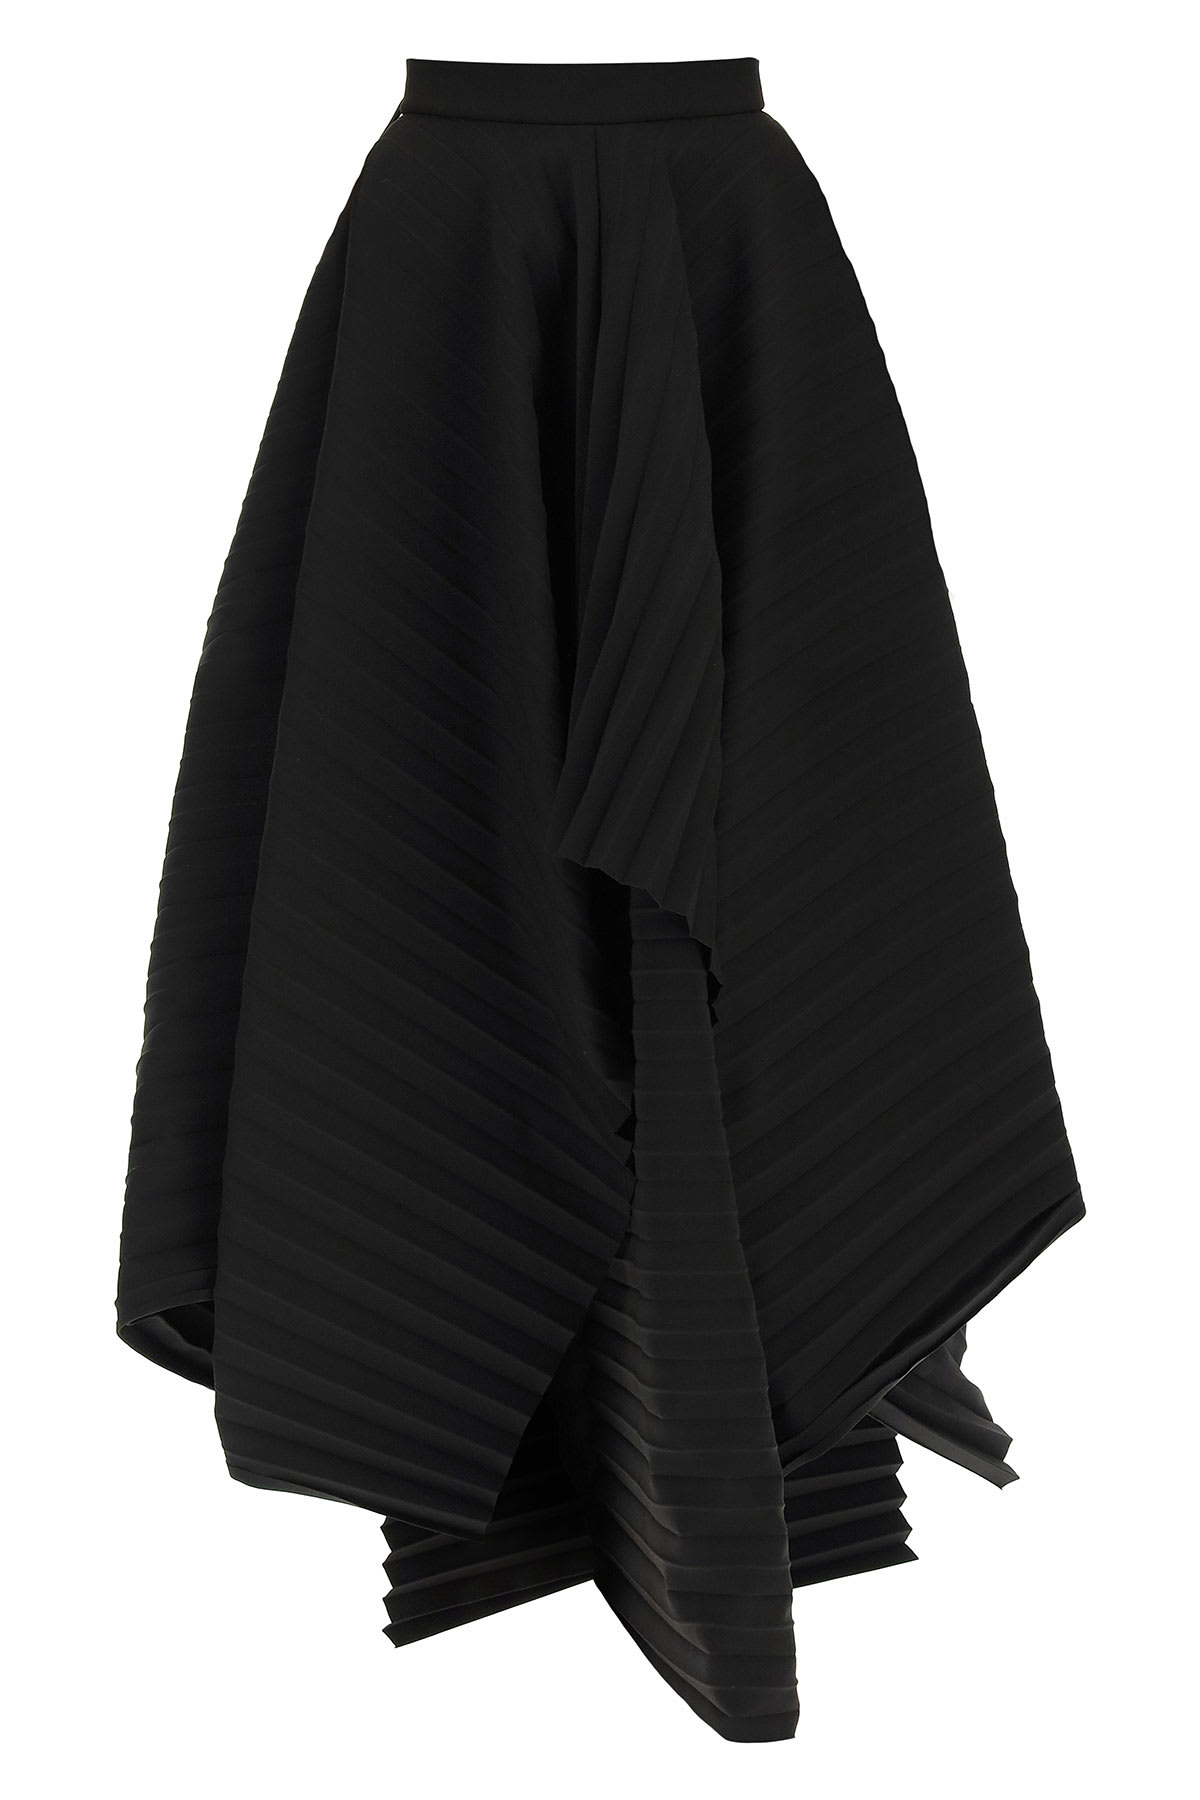 A.W.A.K.E. Mode Asymmetric Pleated Skirt